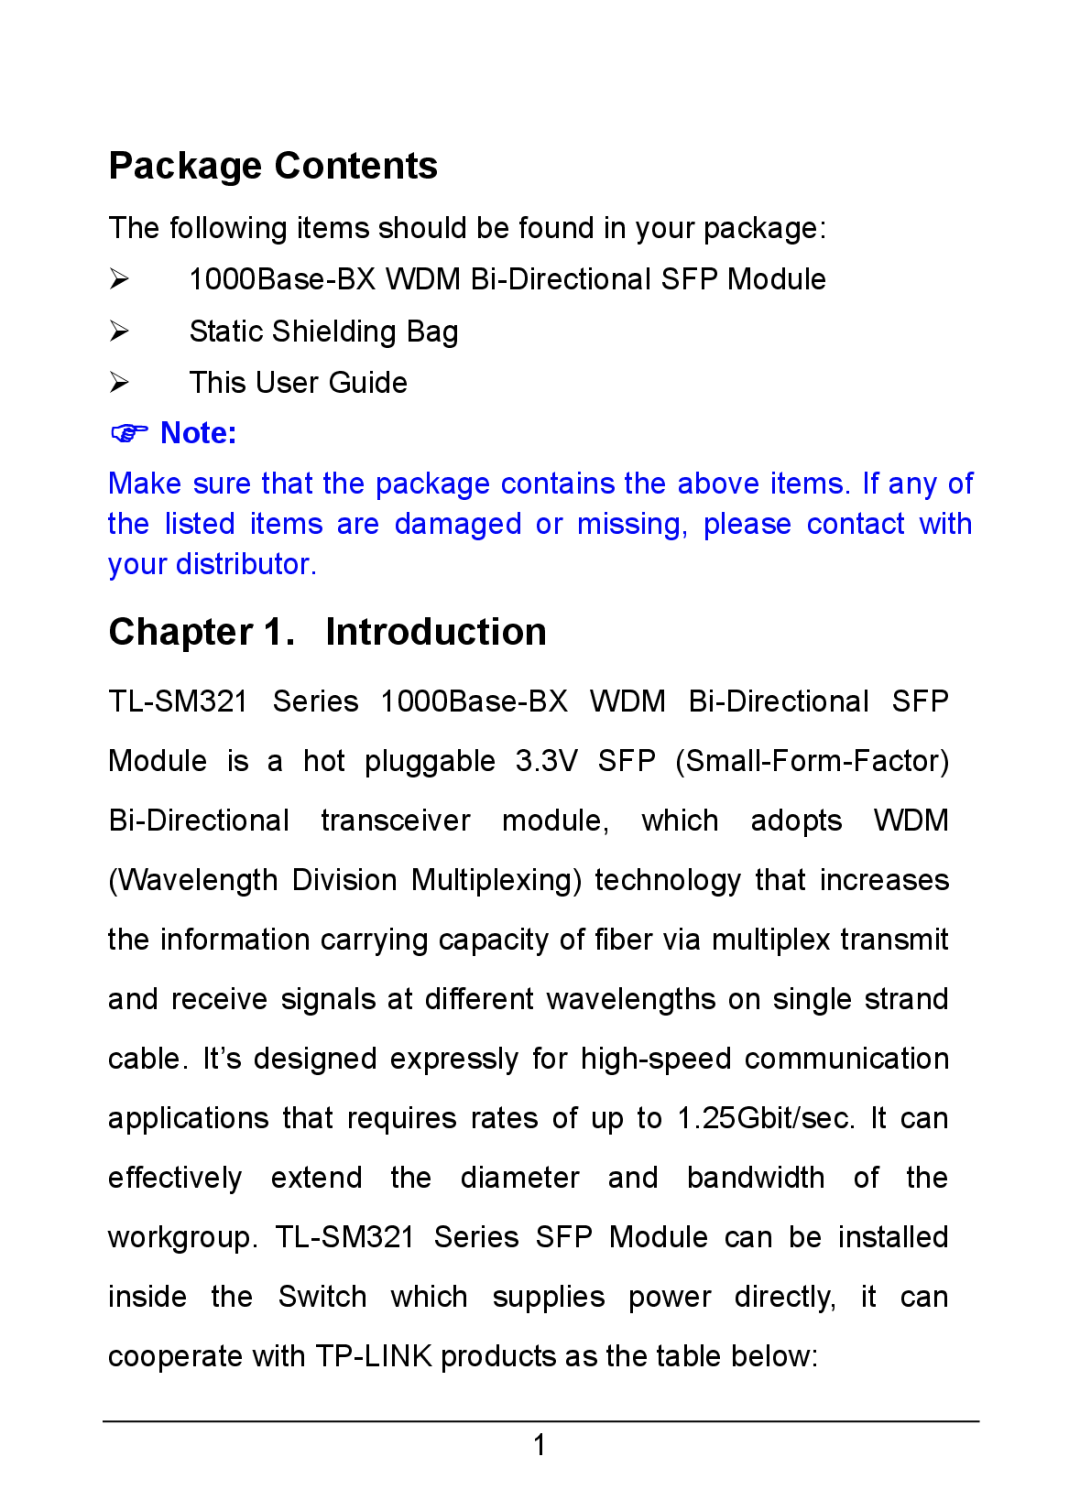 TP-Link TL-SM321A, TL-SM321B manual Package Contents, Introduction 